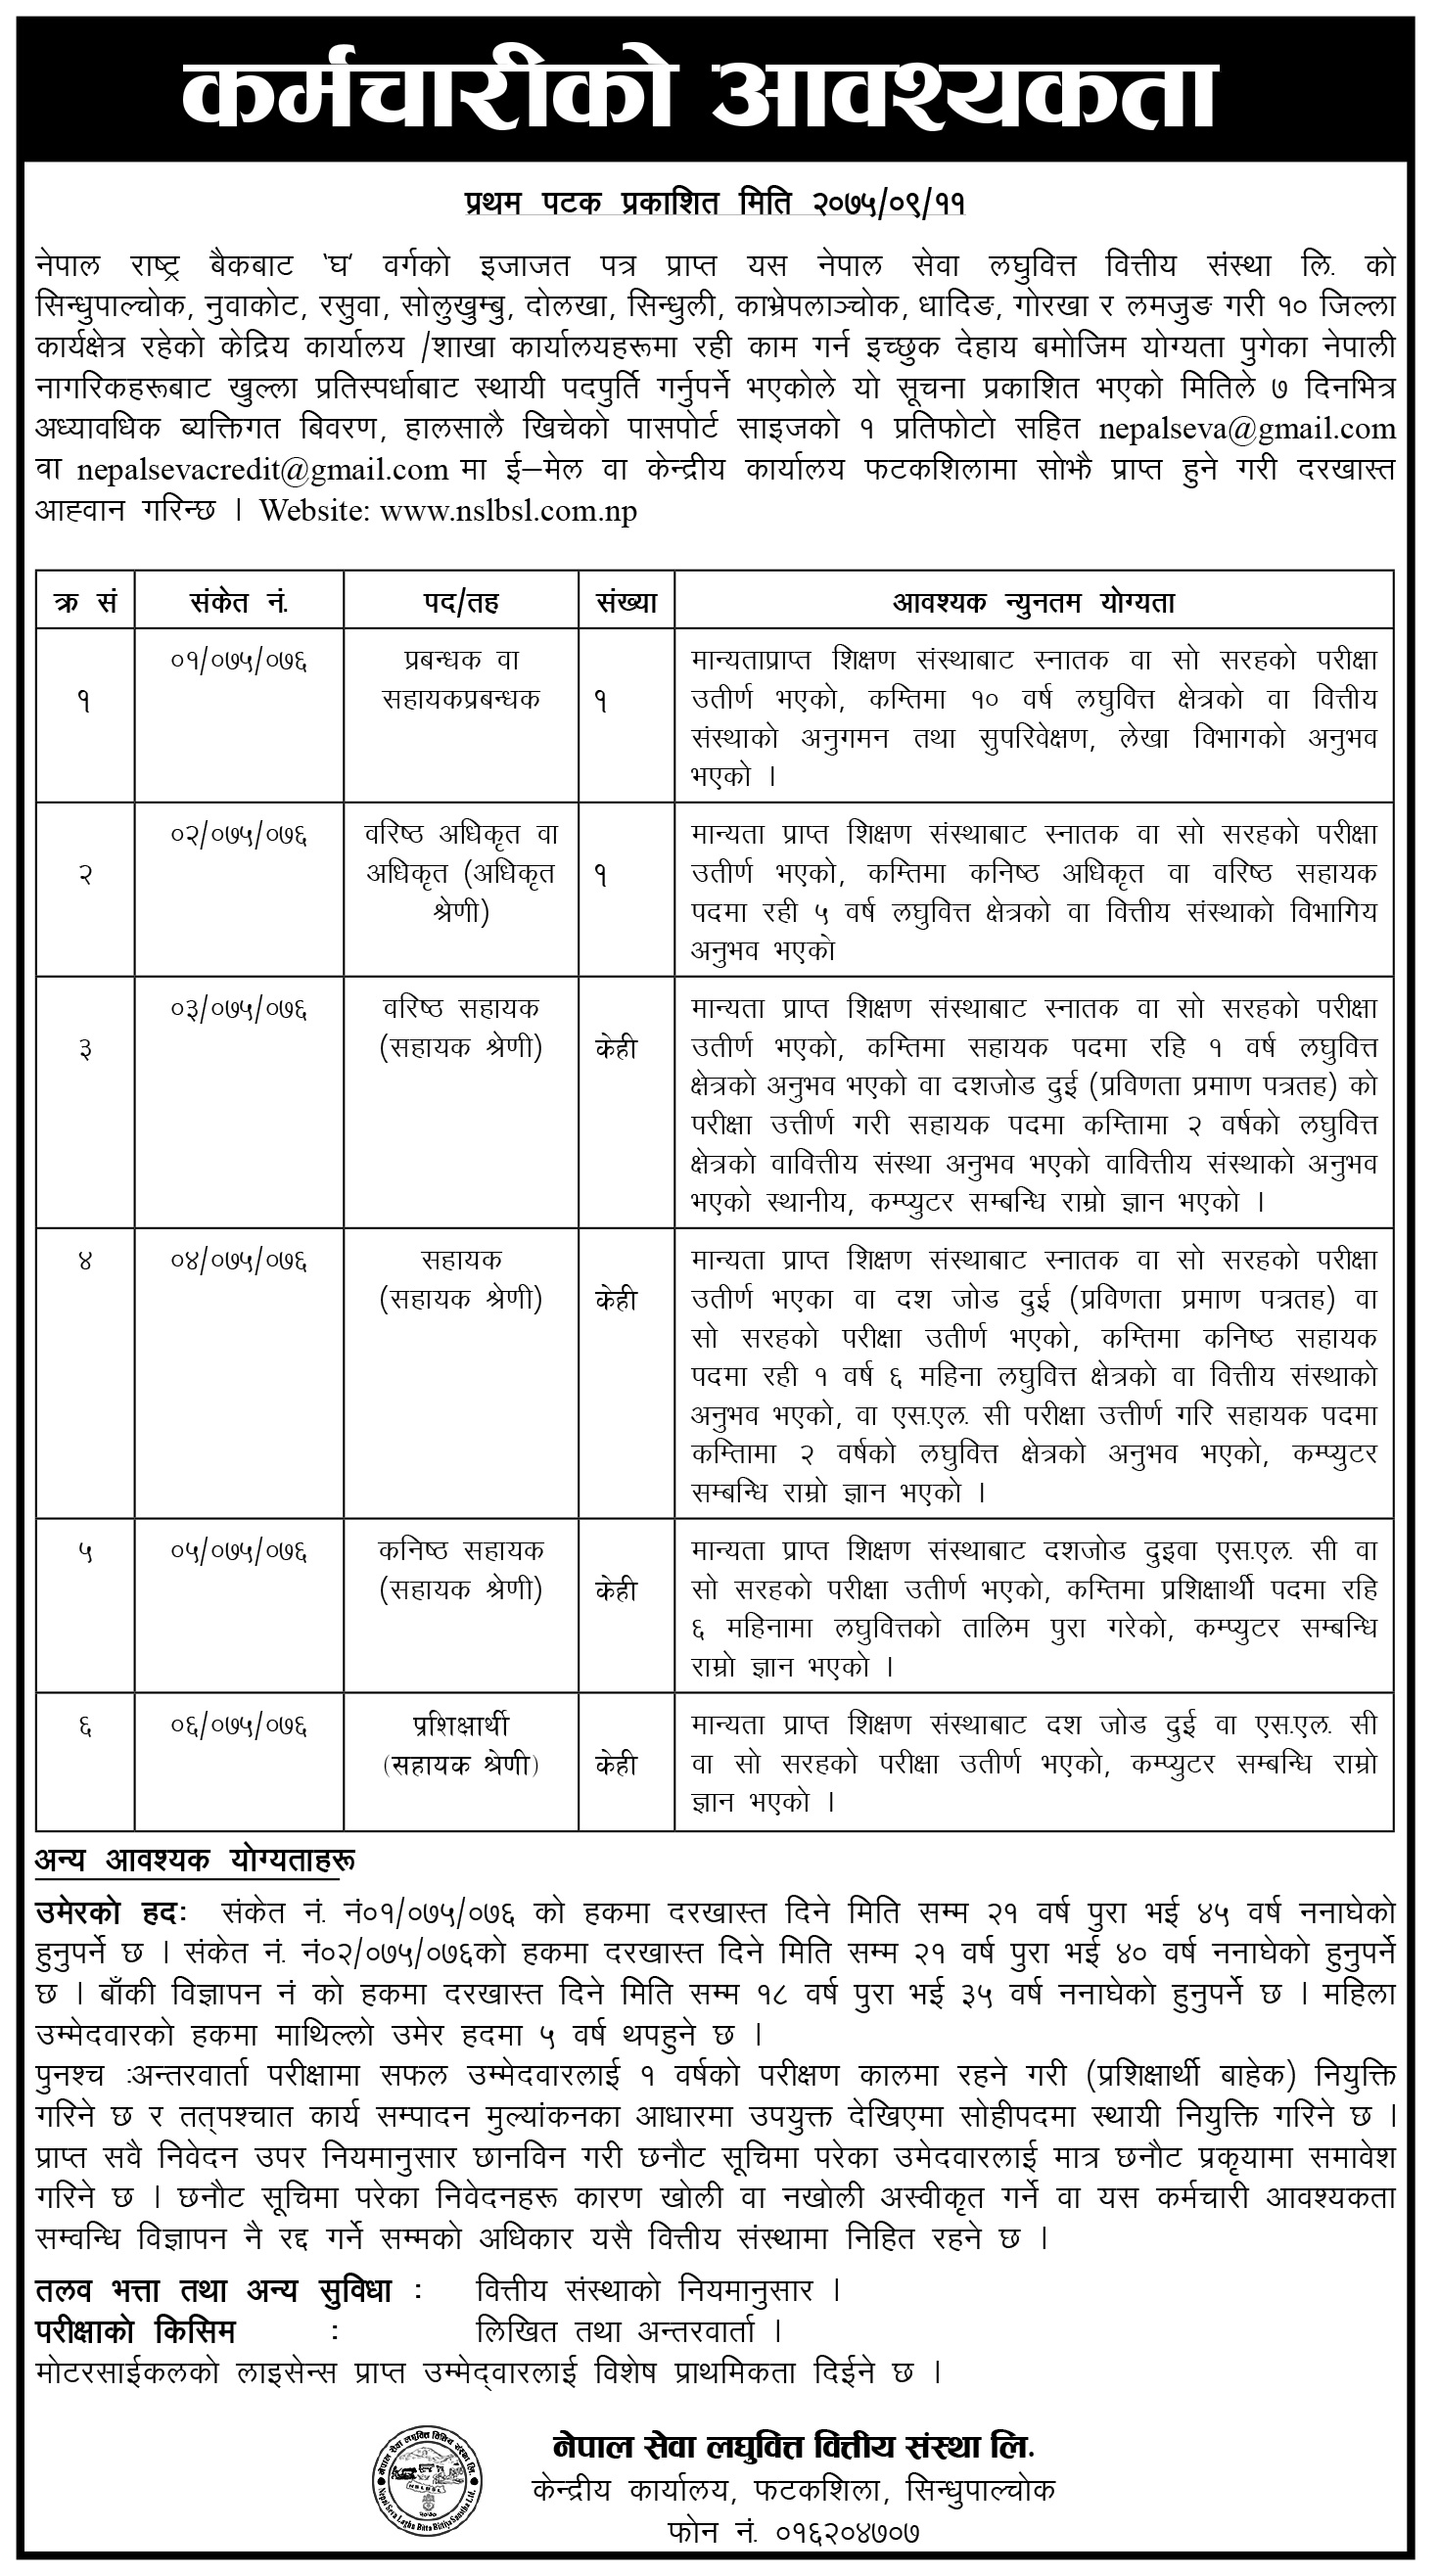 Vacancy Notice from Nepal Sewa Laghubitta Bittiya Sanstha Limited